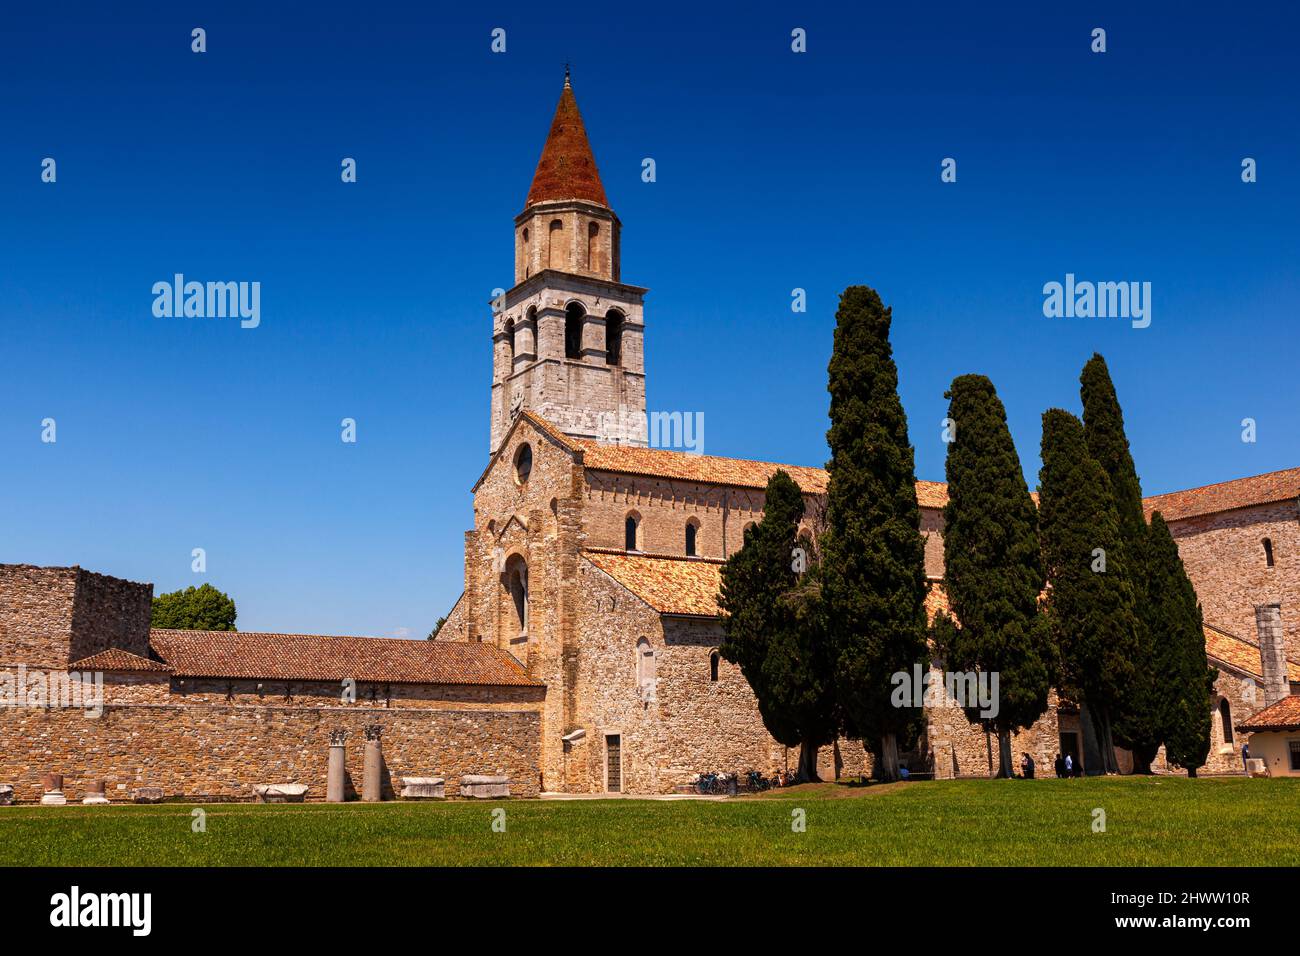 Basilica di Santa Maria Assunta in Aquileia, Udine, Italia. Basilica patriarcale di Aquileia costruita nel 11th secolo. Importante vista cristiana da Roma Foto Stock